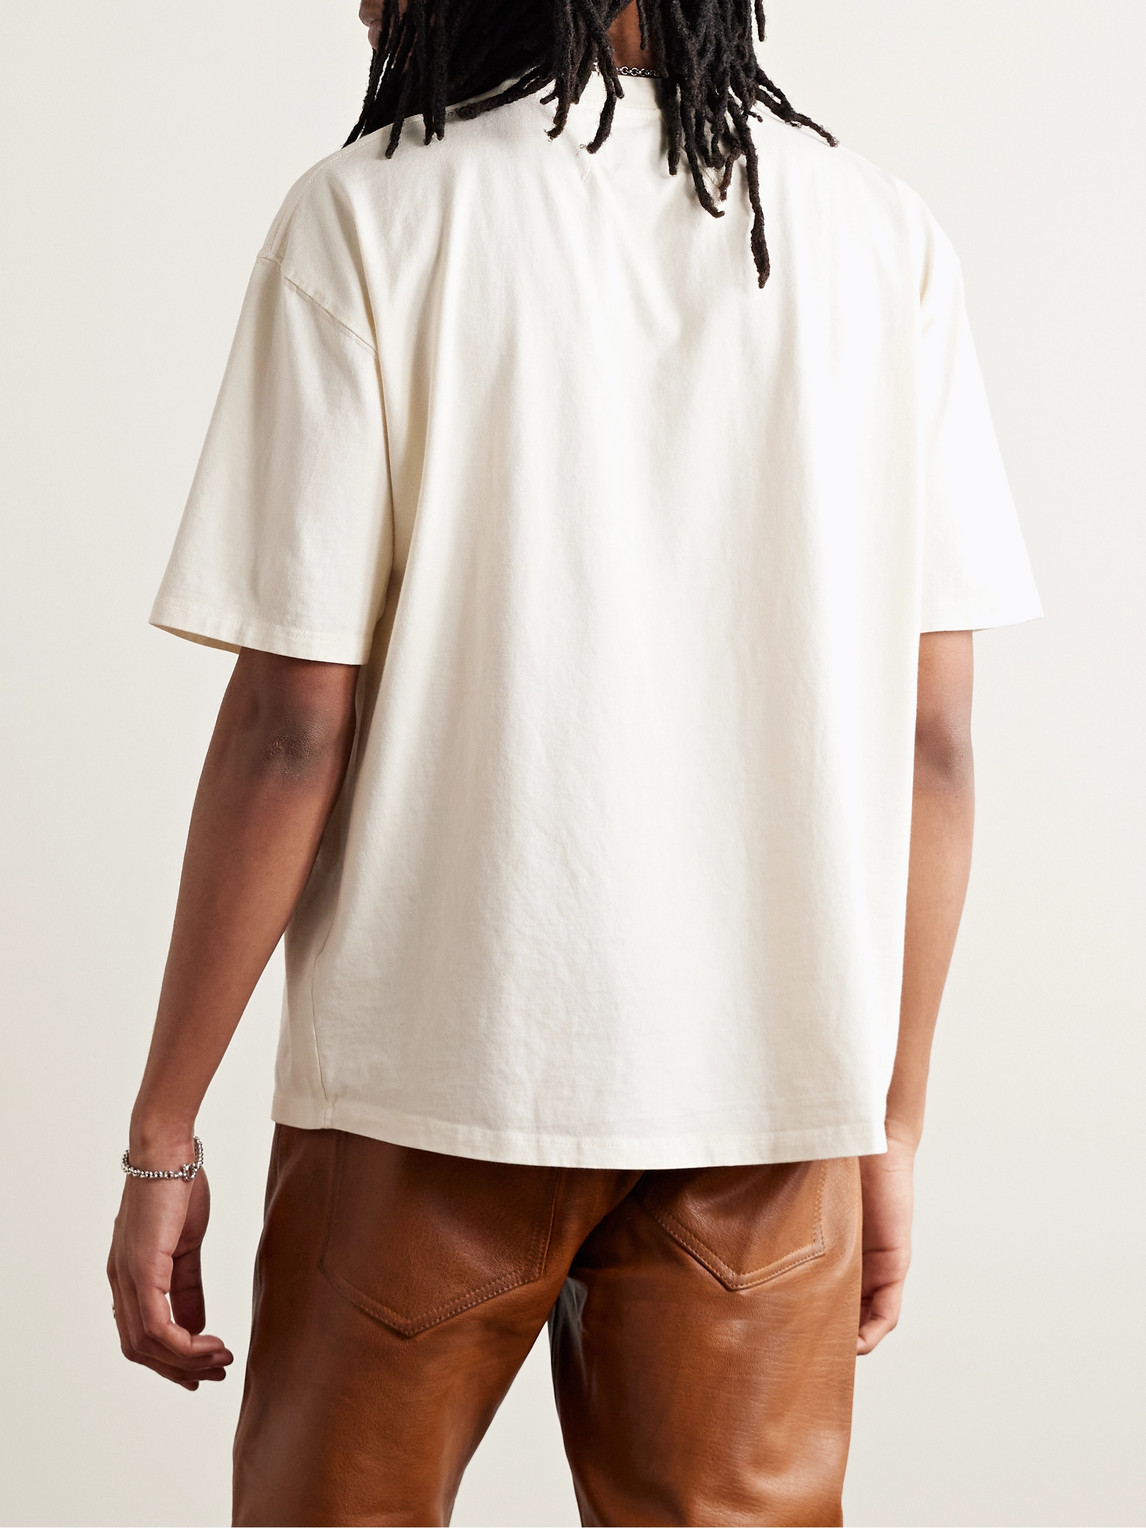 Shop Rhude Saint Croix Logo-print Cotton-jersey T-shirt In White